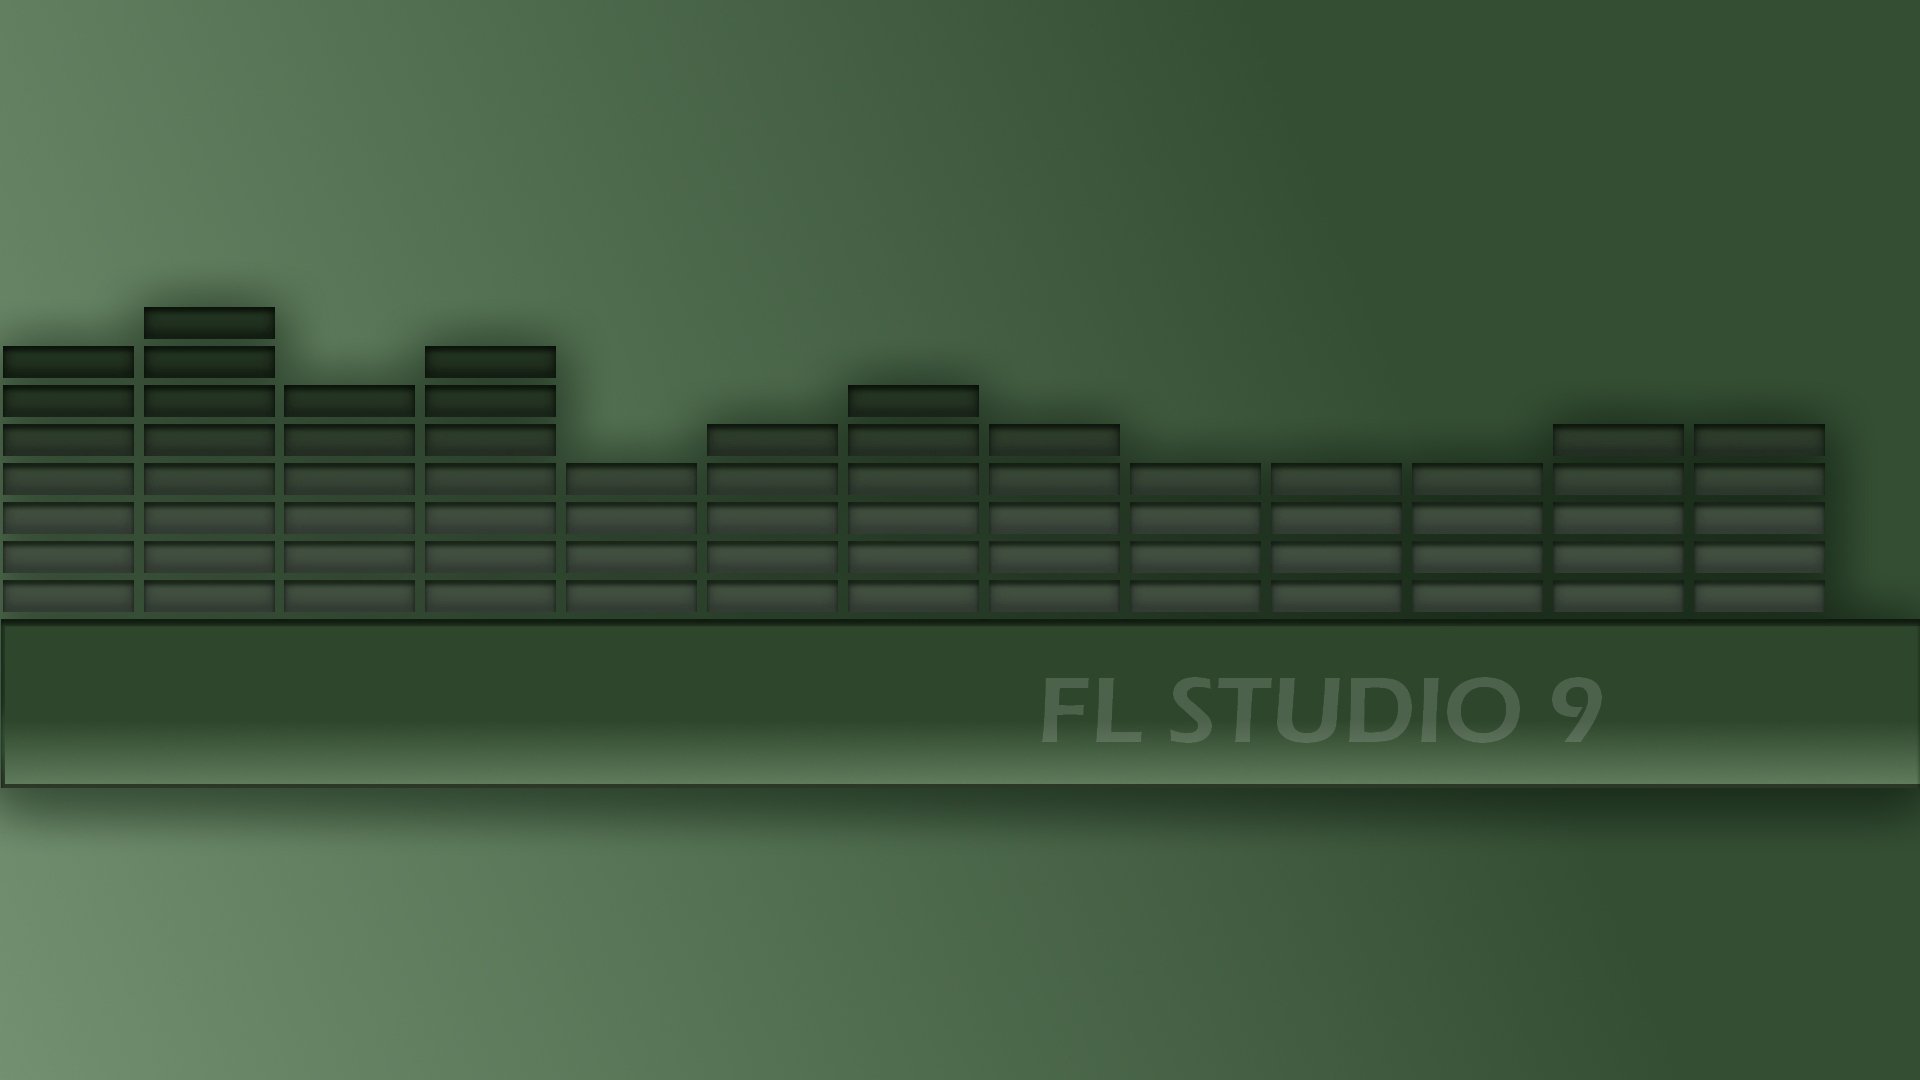 FL Studio Wallpaper for Inspiration  rFLStudio